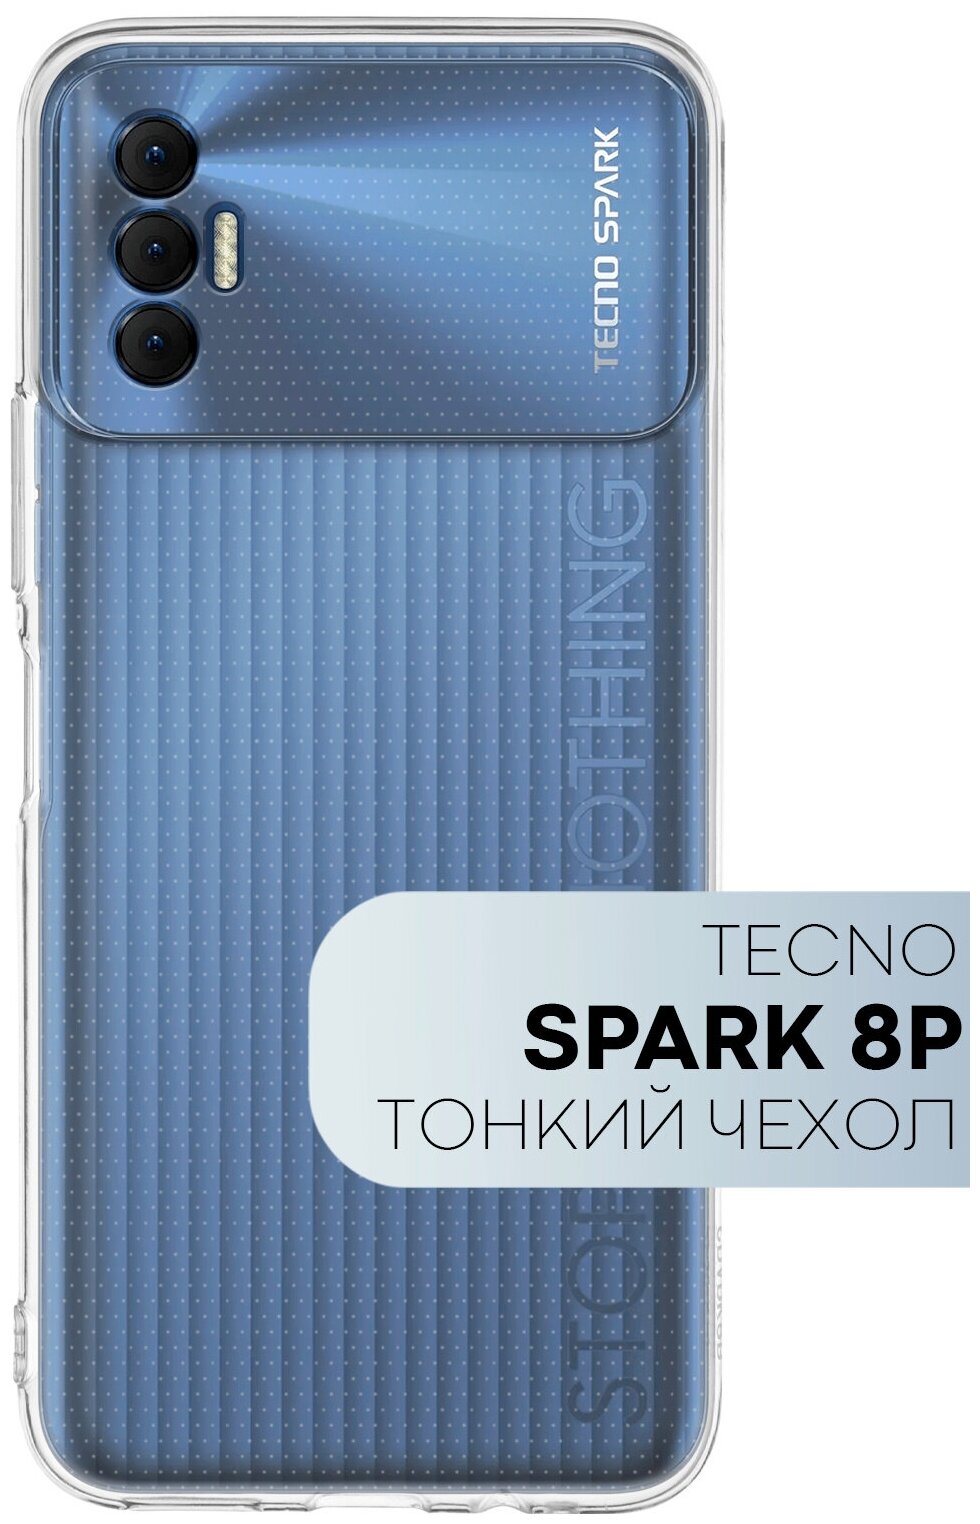 Тонкий чехол для Tecno Spark 8P (Техно Спарк 8П) силиконовый чехол с защитой модуля камер, прозрачный чехол